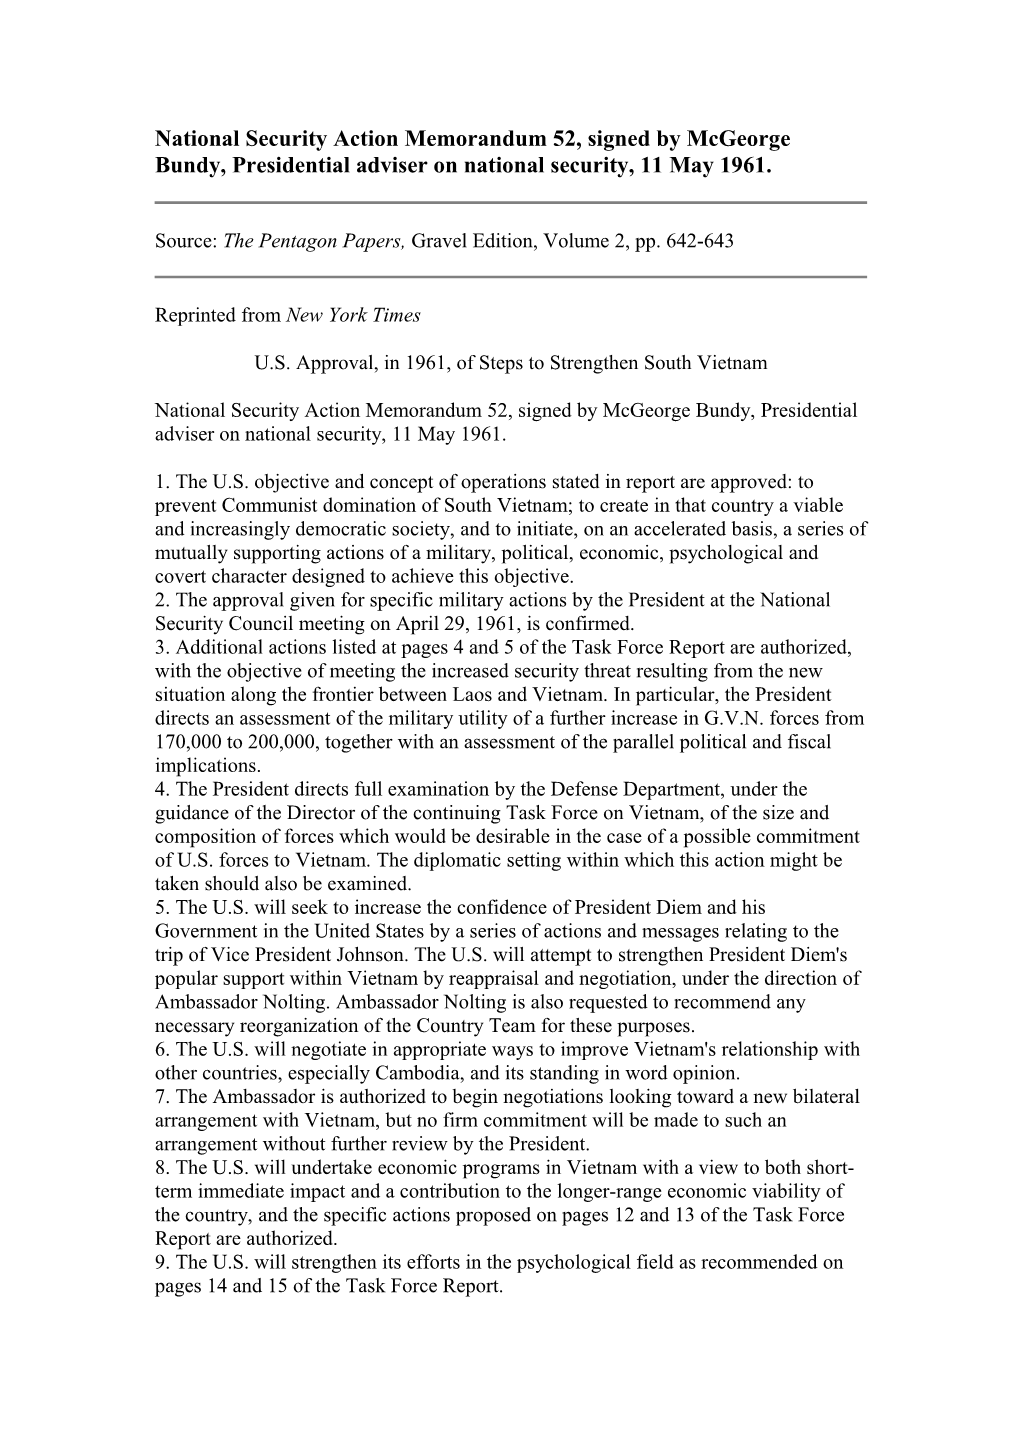 National Security Action Memorandum 52, Signed by Mcgeorge Bundy, Presidential Adviser